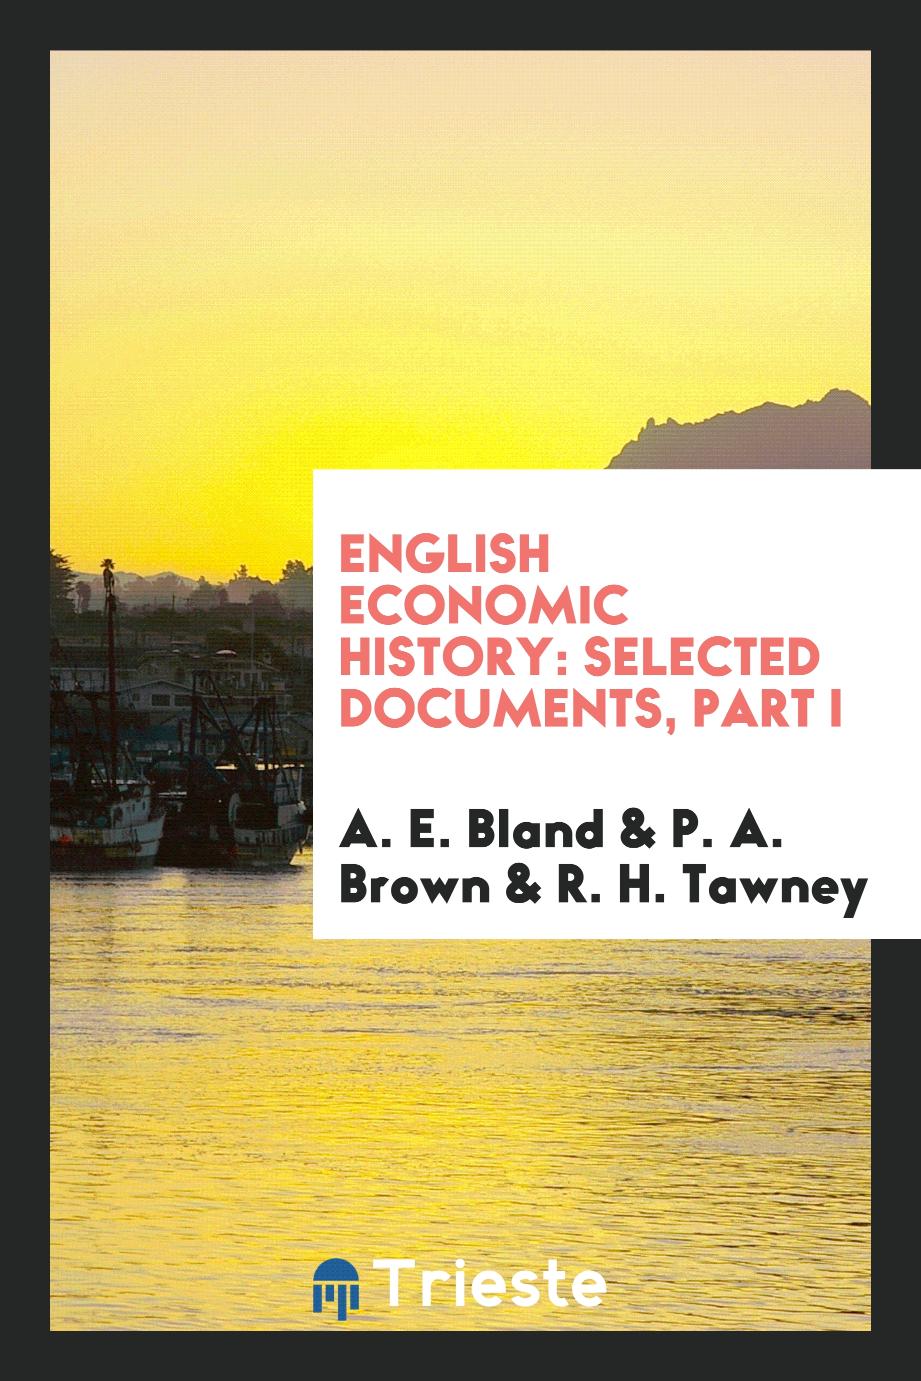 English economic history: selected documents, Part I